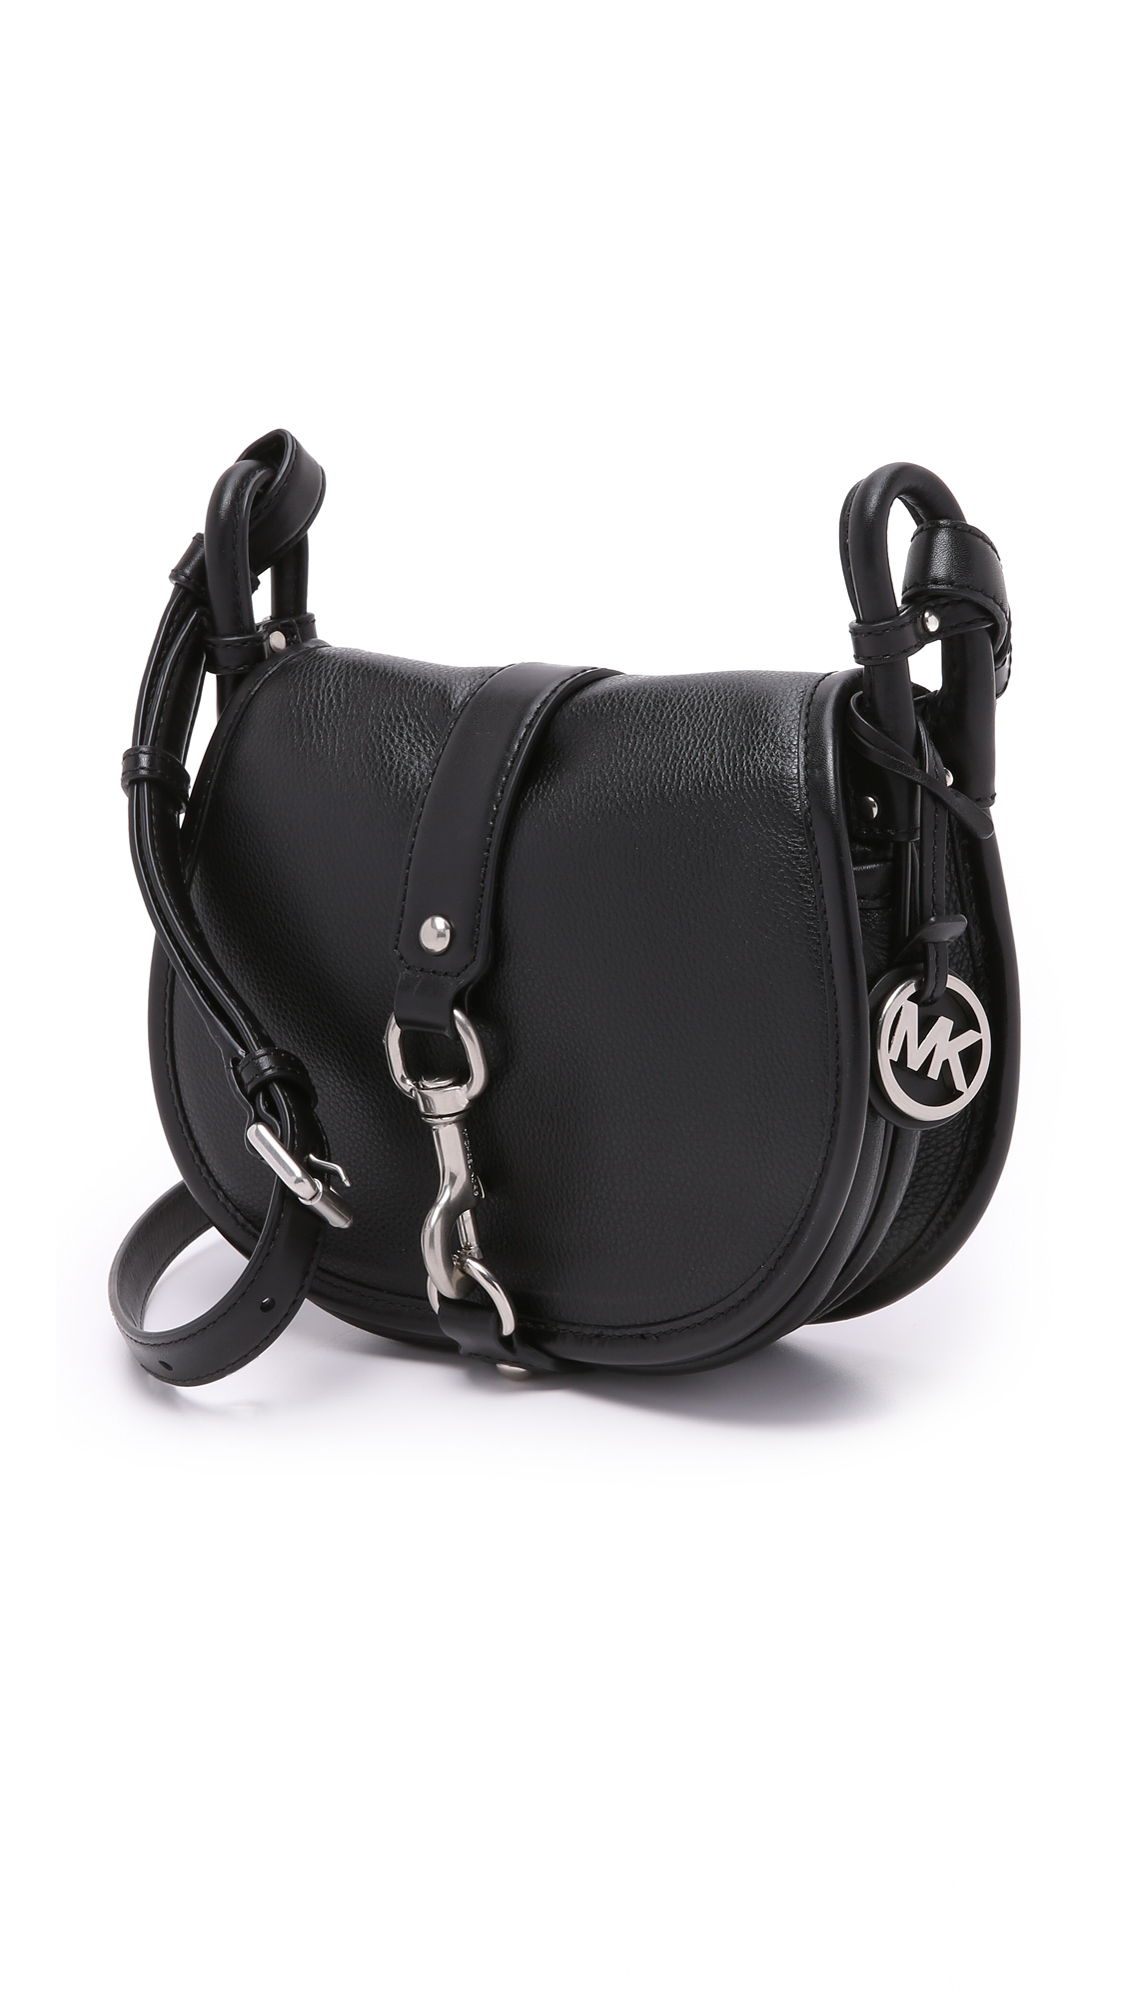 Michael Kors black leather crossbody saddle bag purse www.salaberlanga.com